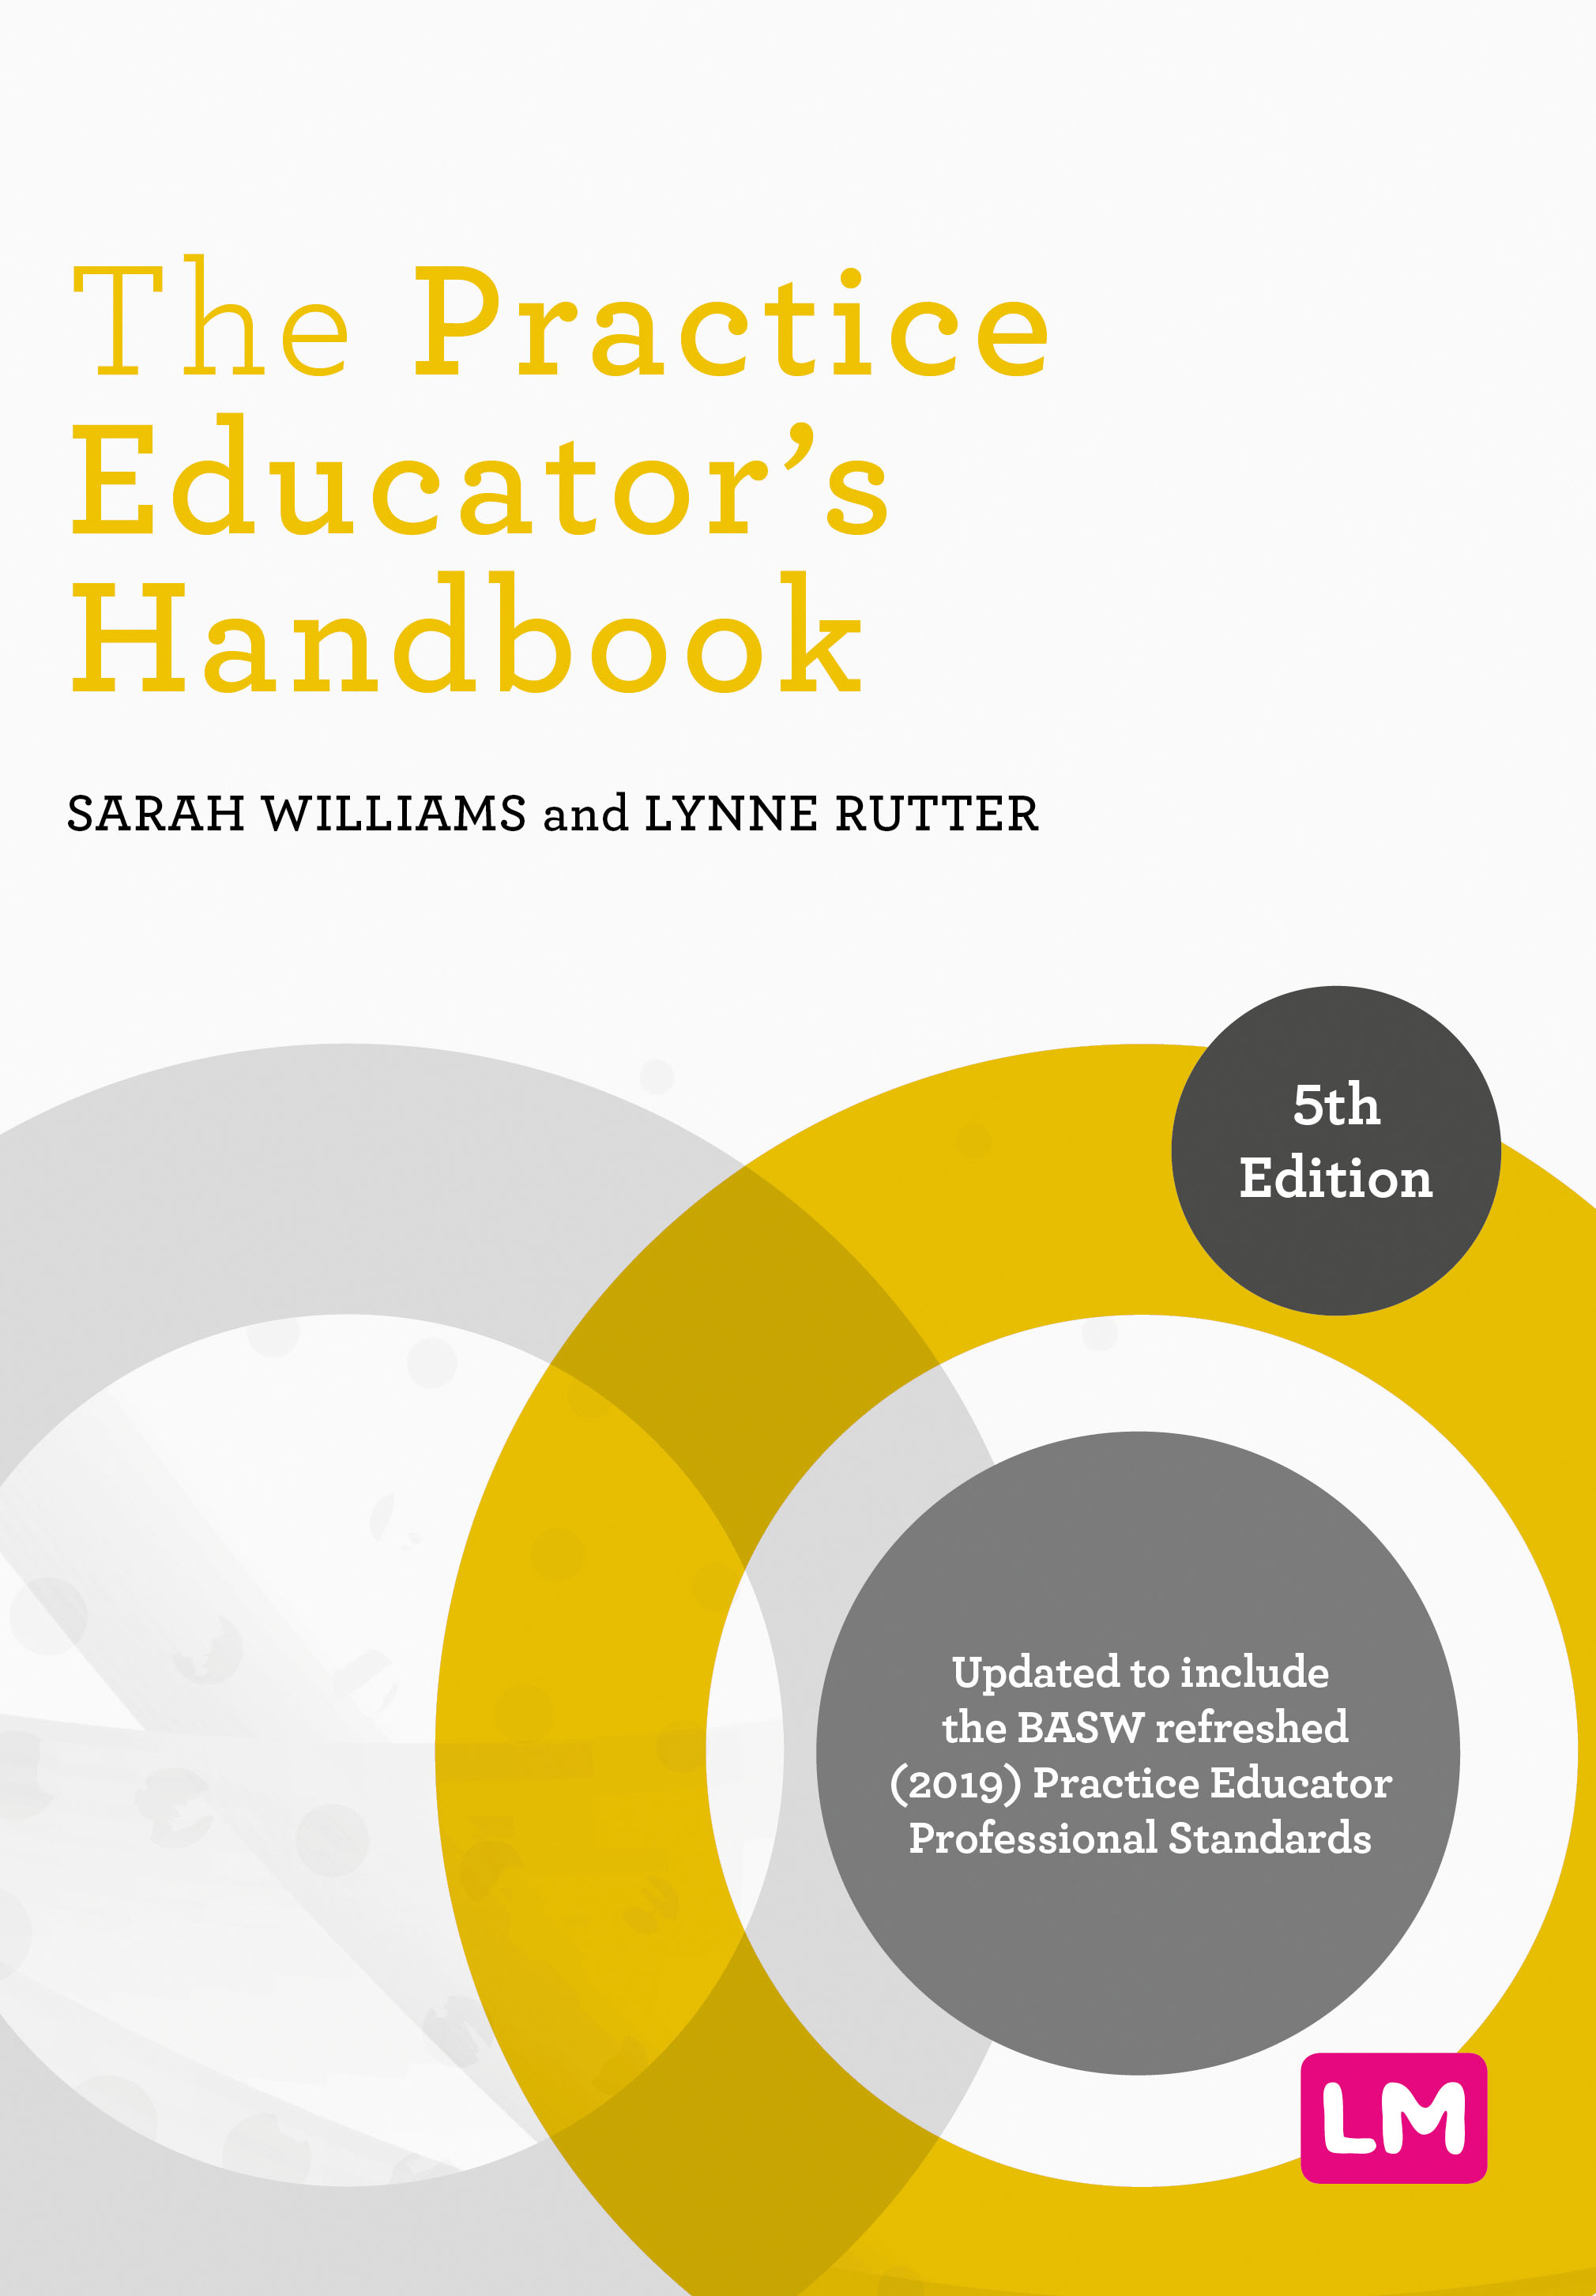 The Practice Educator's Handbook book cover image